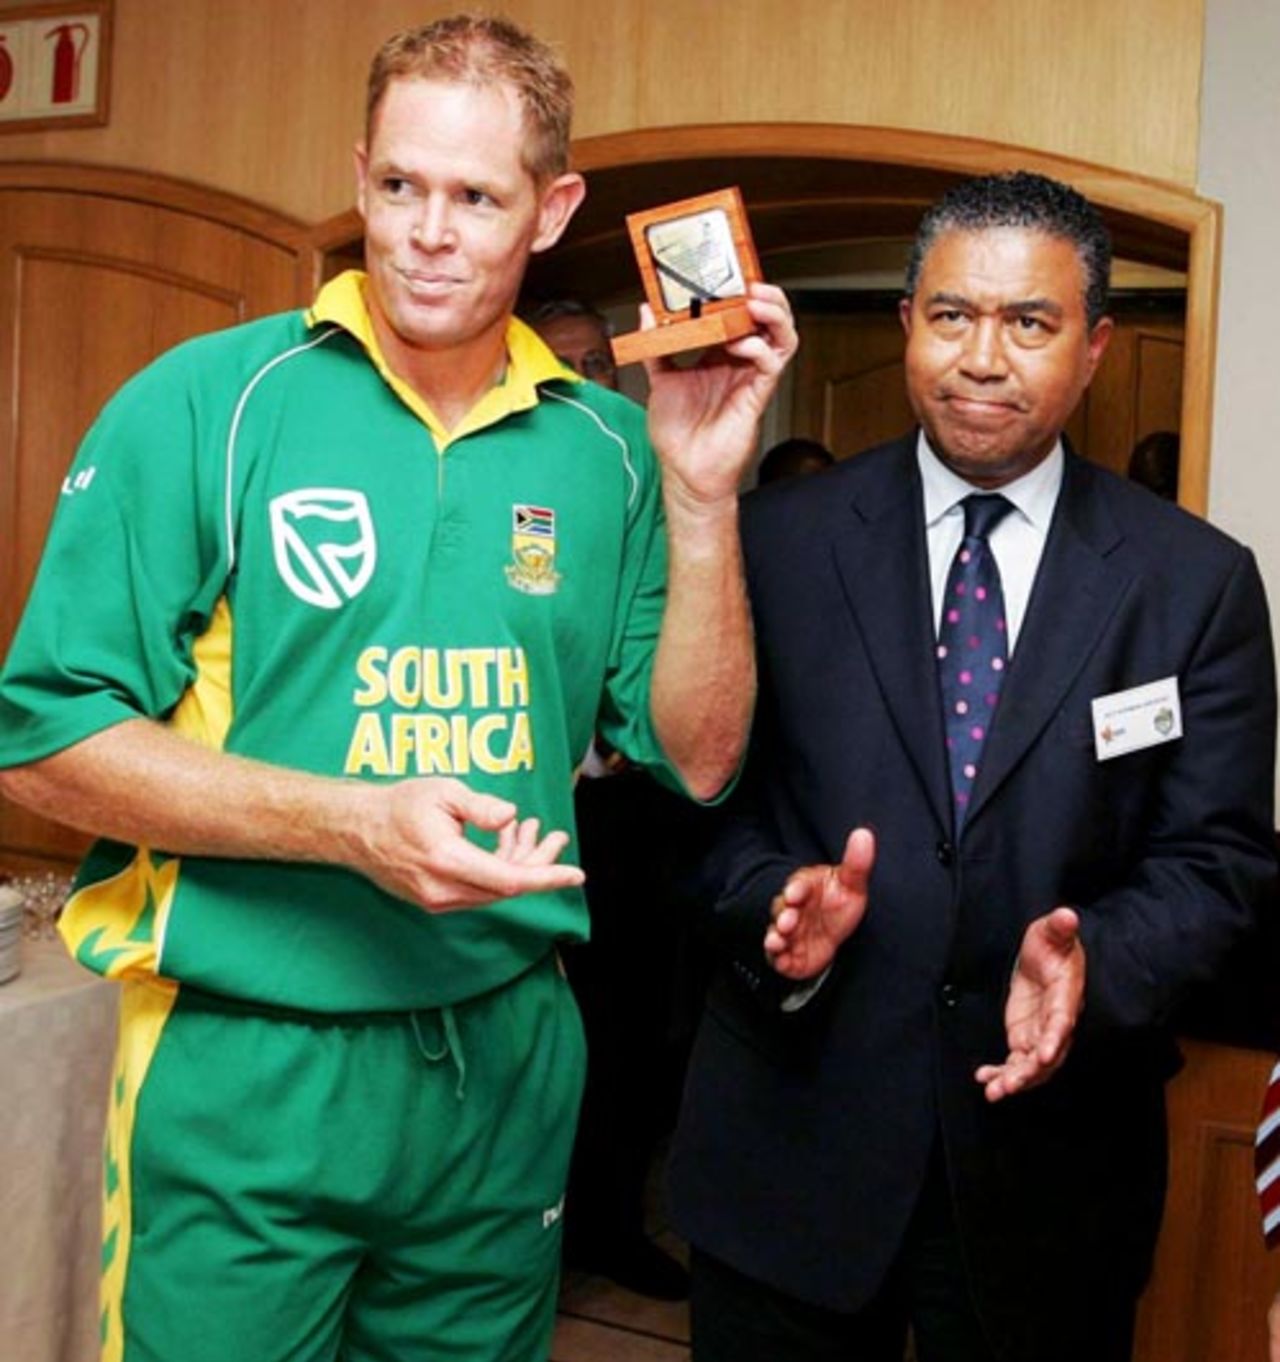 Shaun Pollock displays a medallion as Cricket South Africa president Norman Arendse looks on, 5th ODI, Johannesburg, February 3, 2008